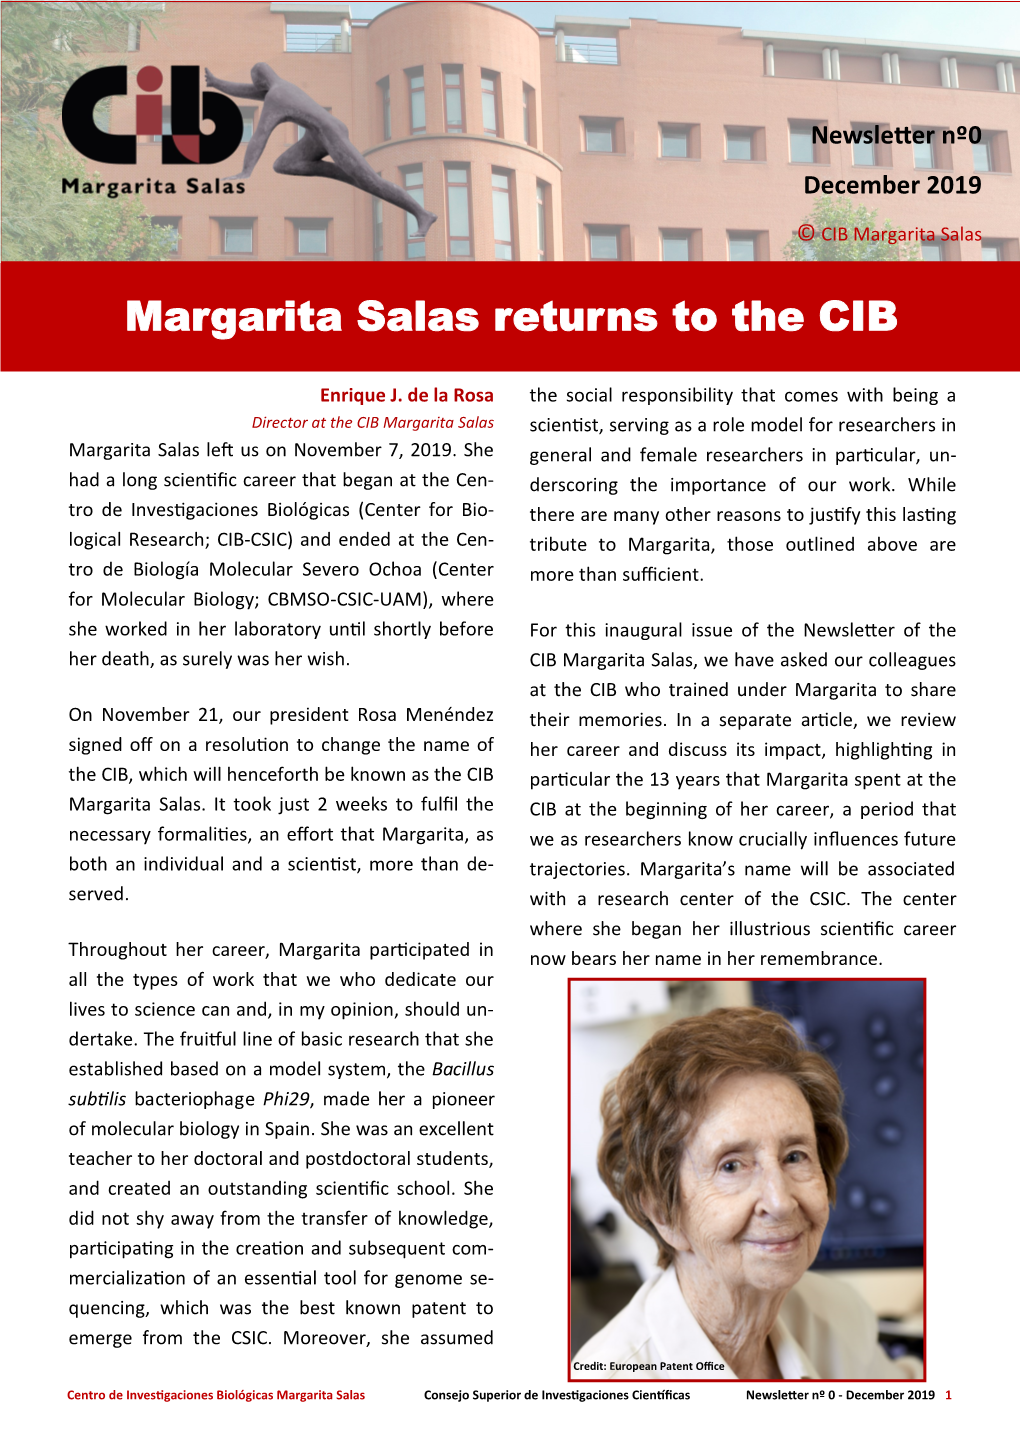 Margarita Salas Returns to the CIB